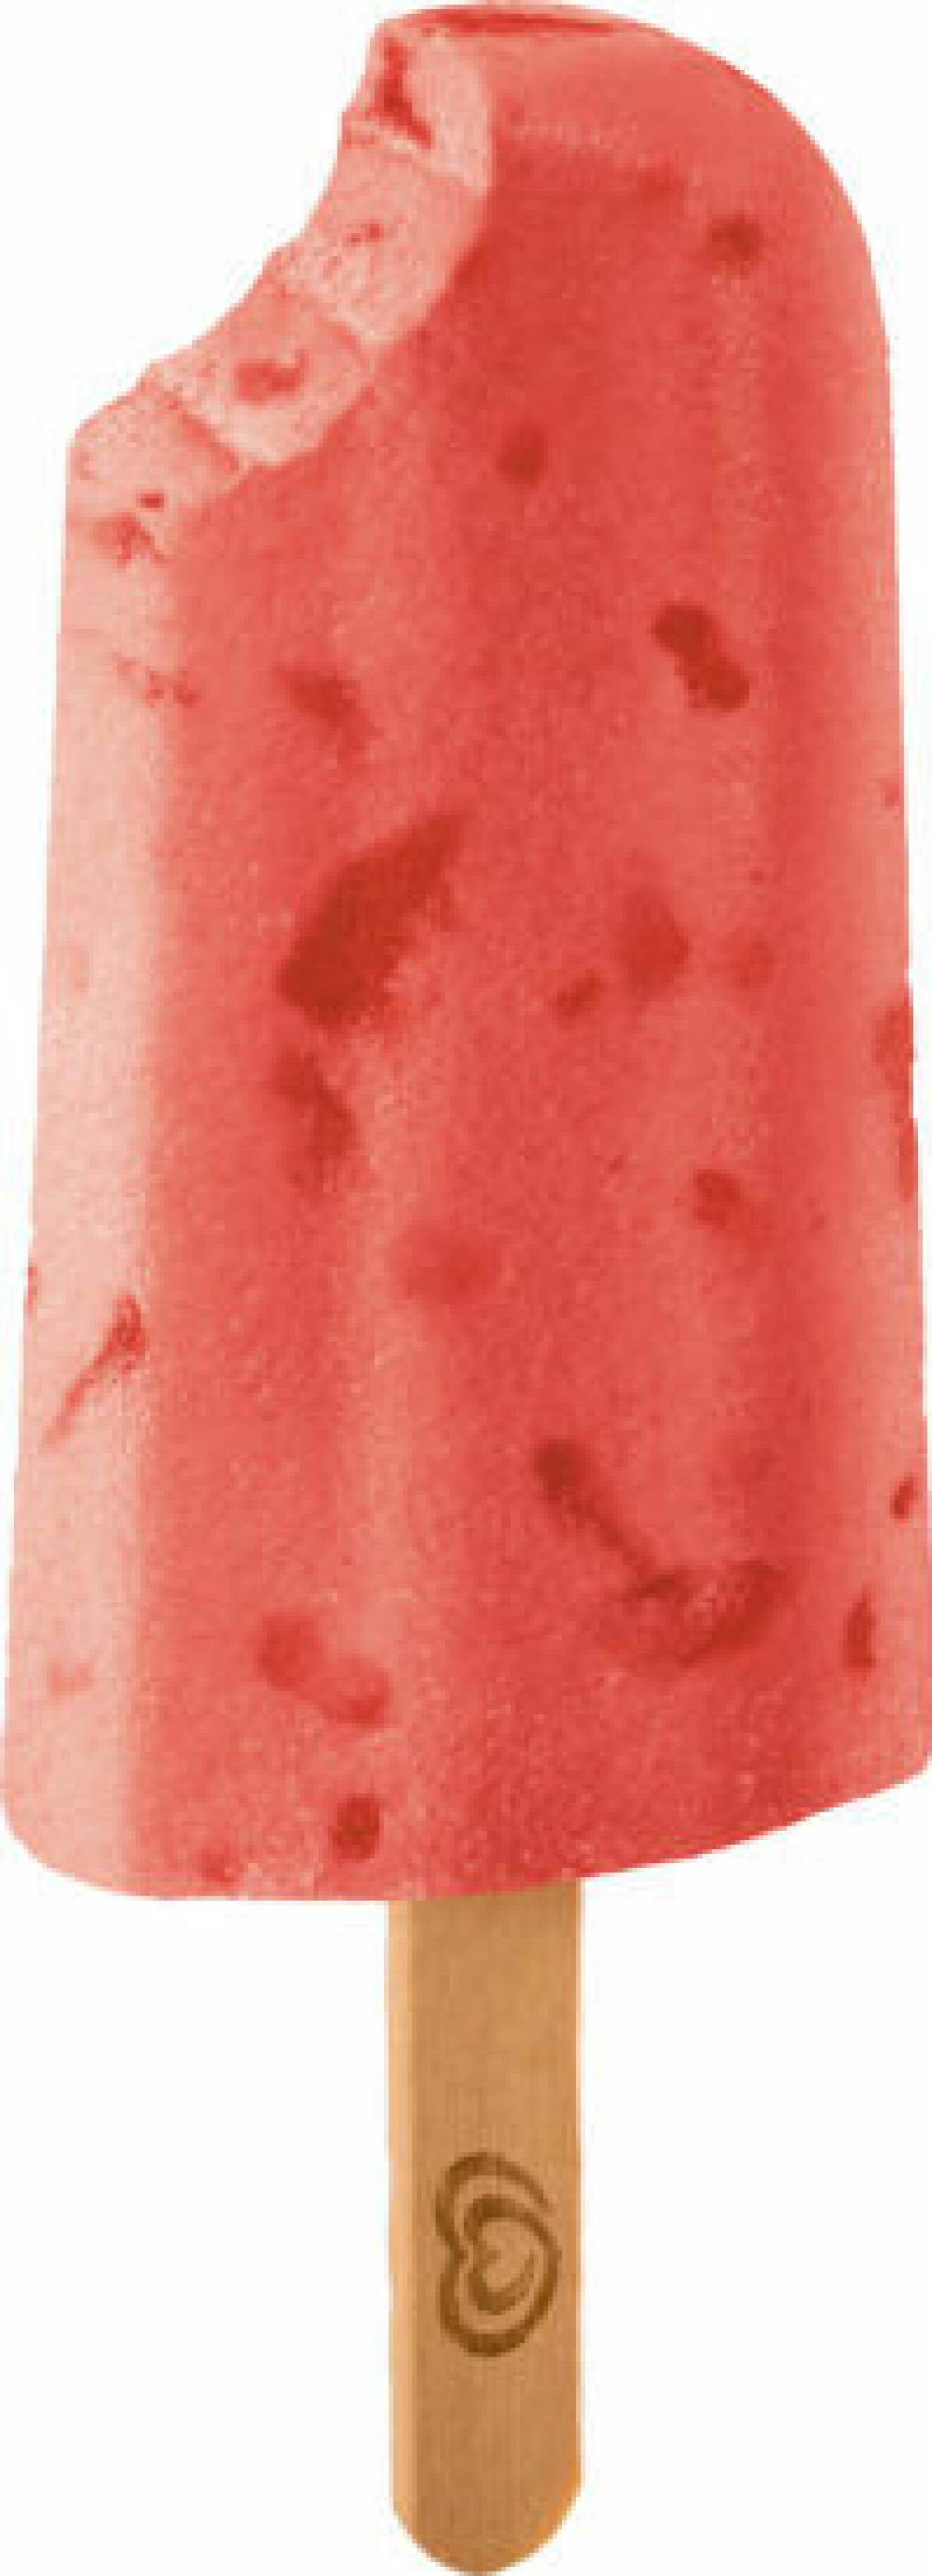 glas-solero-strawberry-smoothie